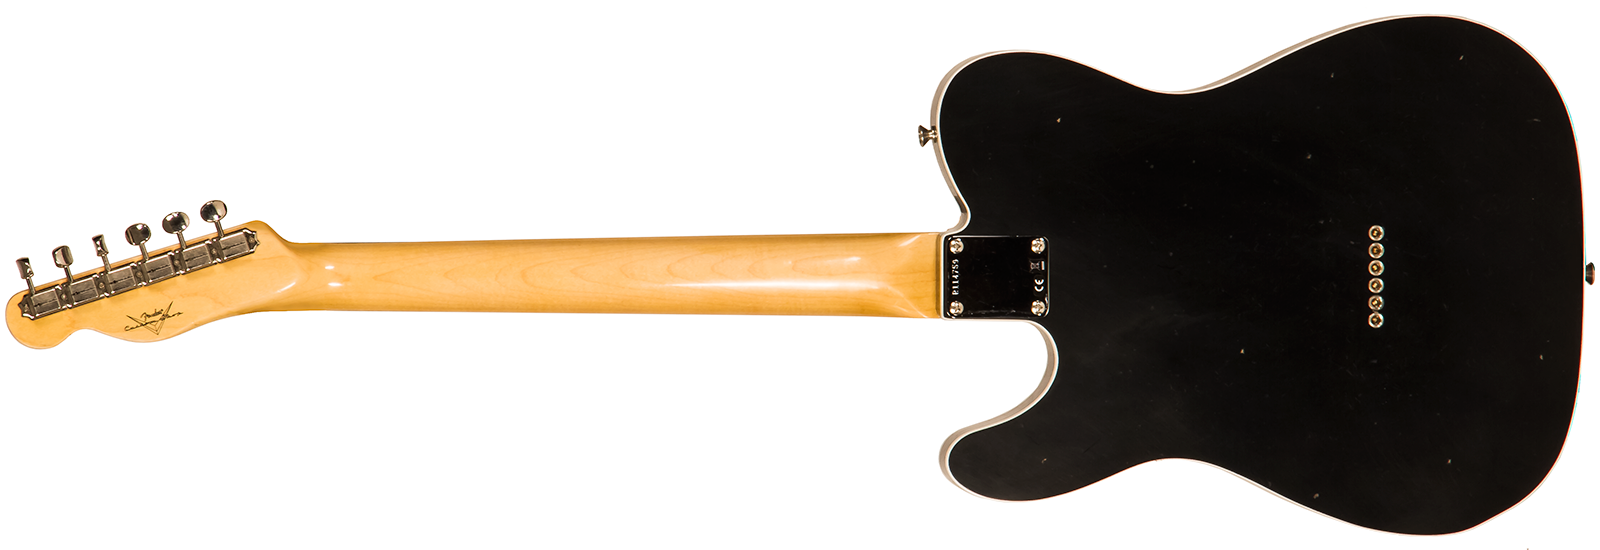 Fender Custom Shop Tele 1960 2s Ht Rw #r114759 - Journeyman Relic Black - Televorm elektrische gitaar - Variation 1